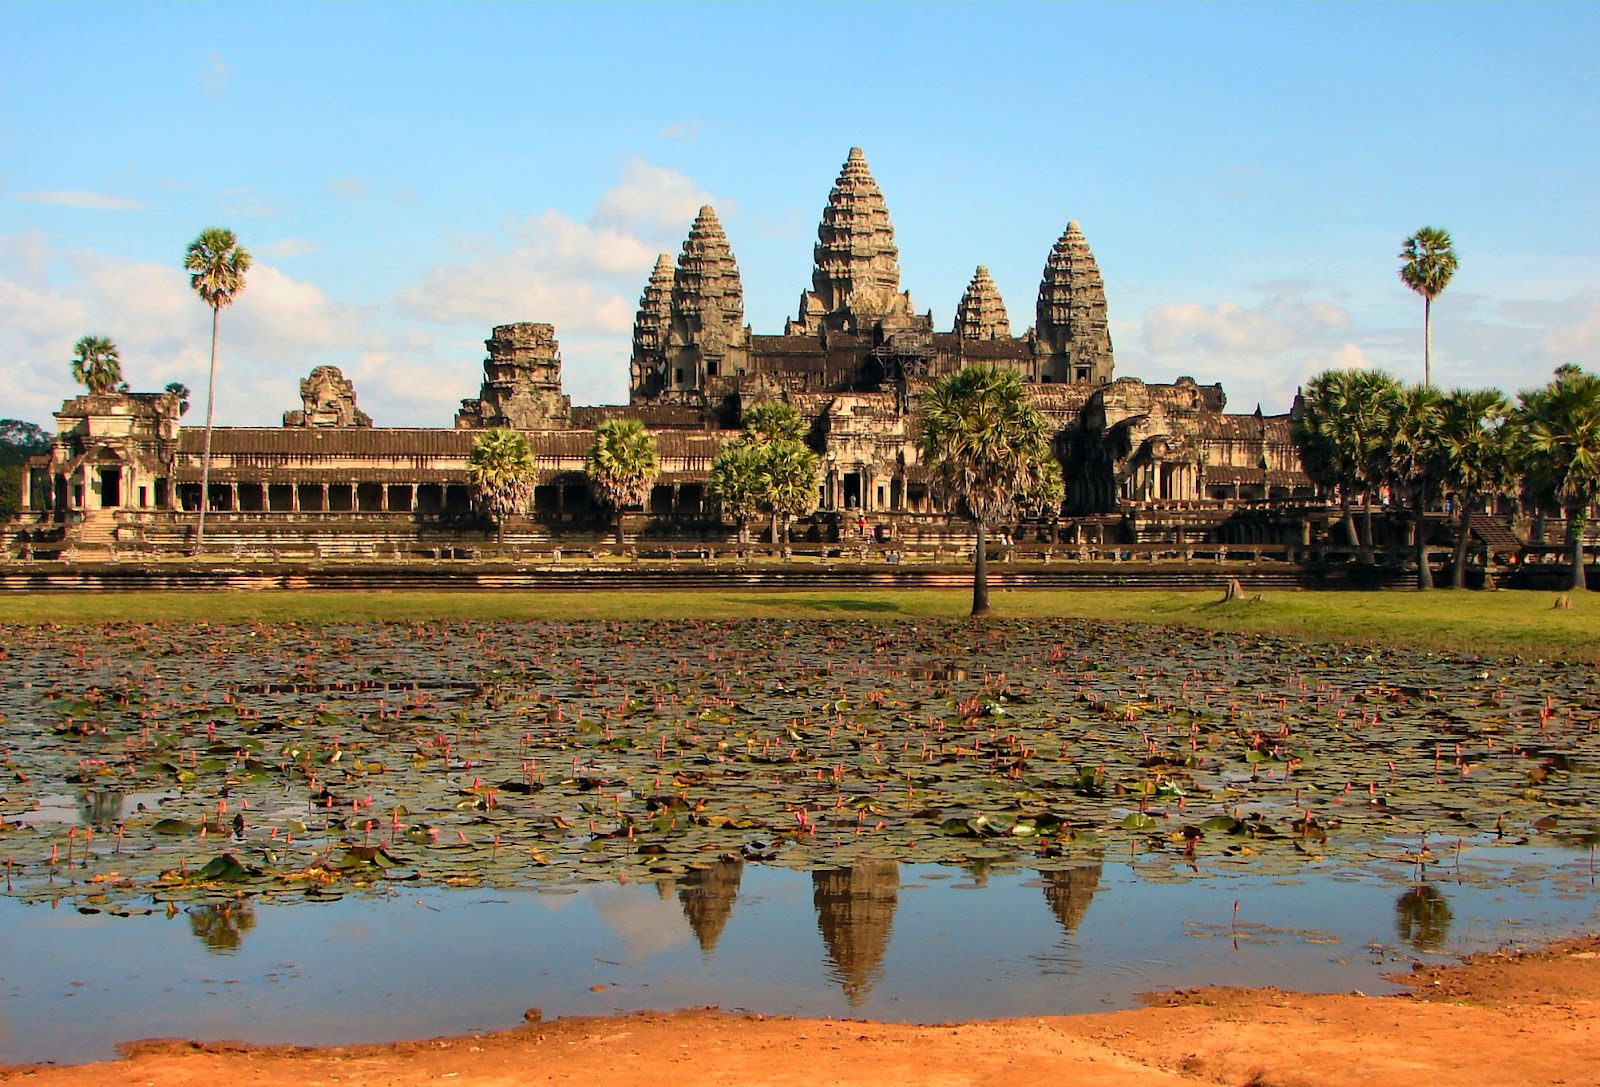 https://upload.wikimedia.org/wikipedia/commons/4/41/Angkor_Wat.jpg